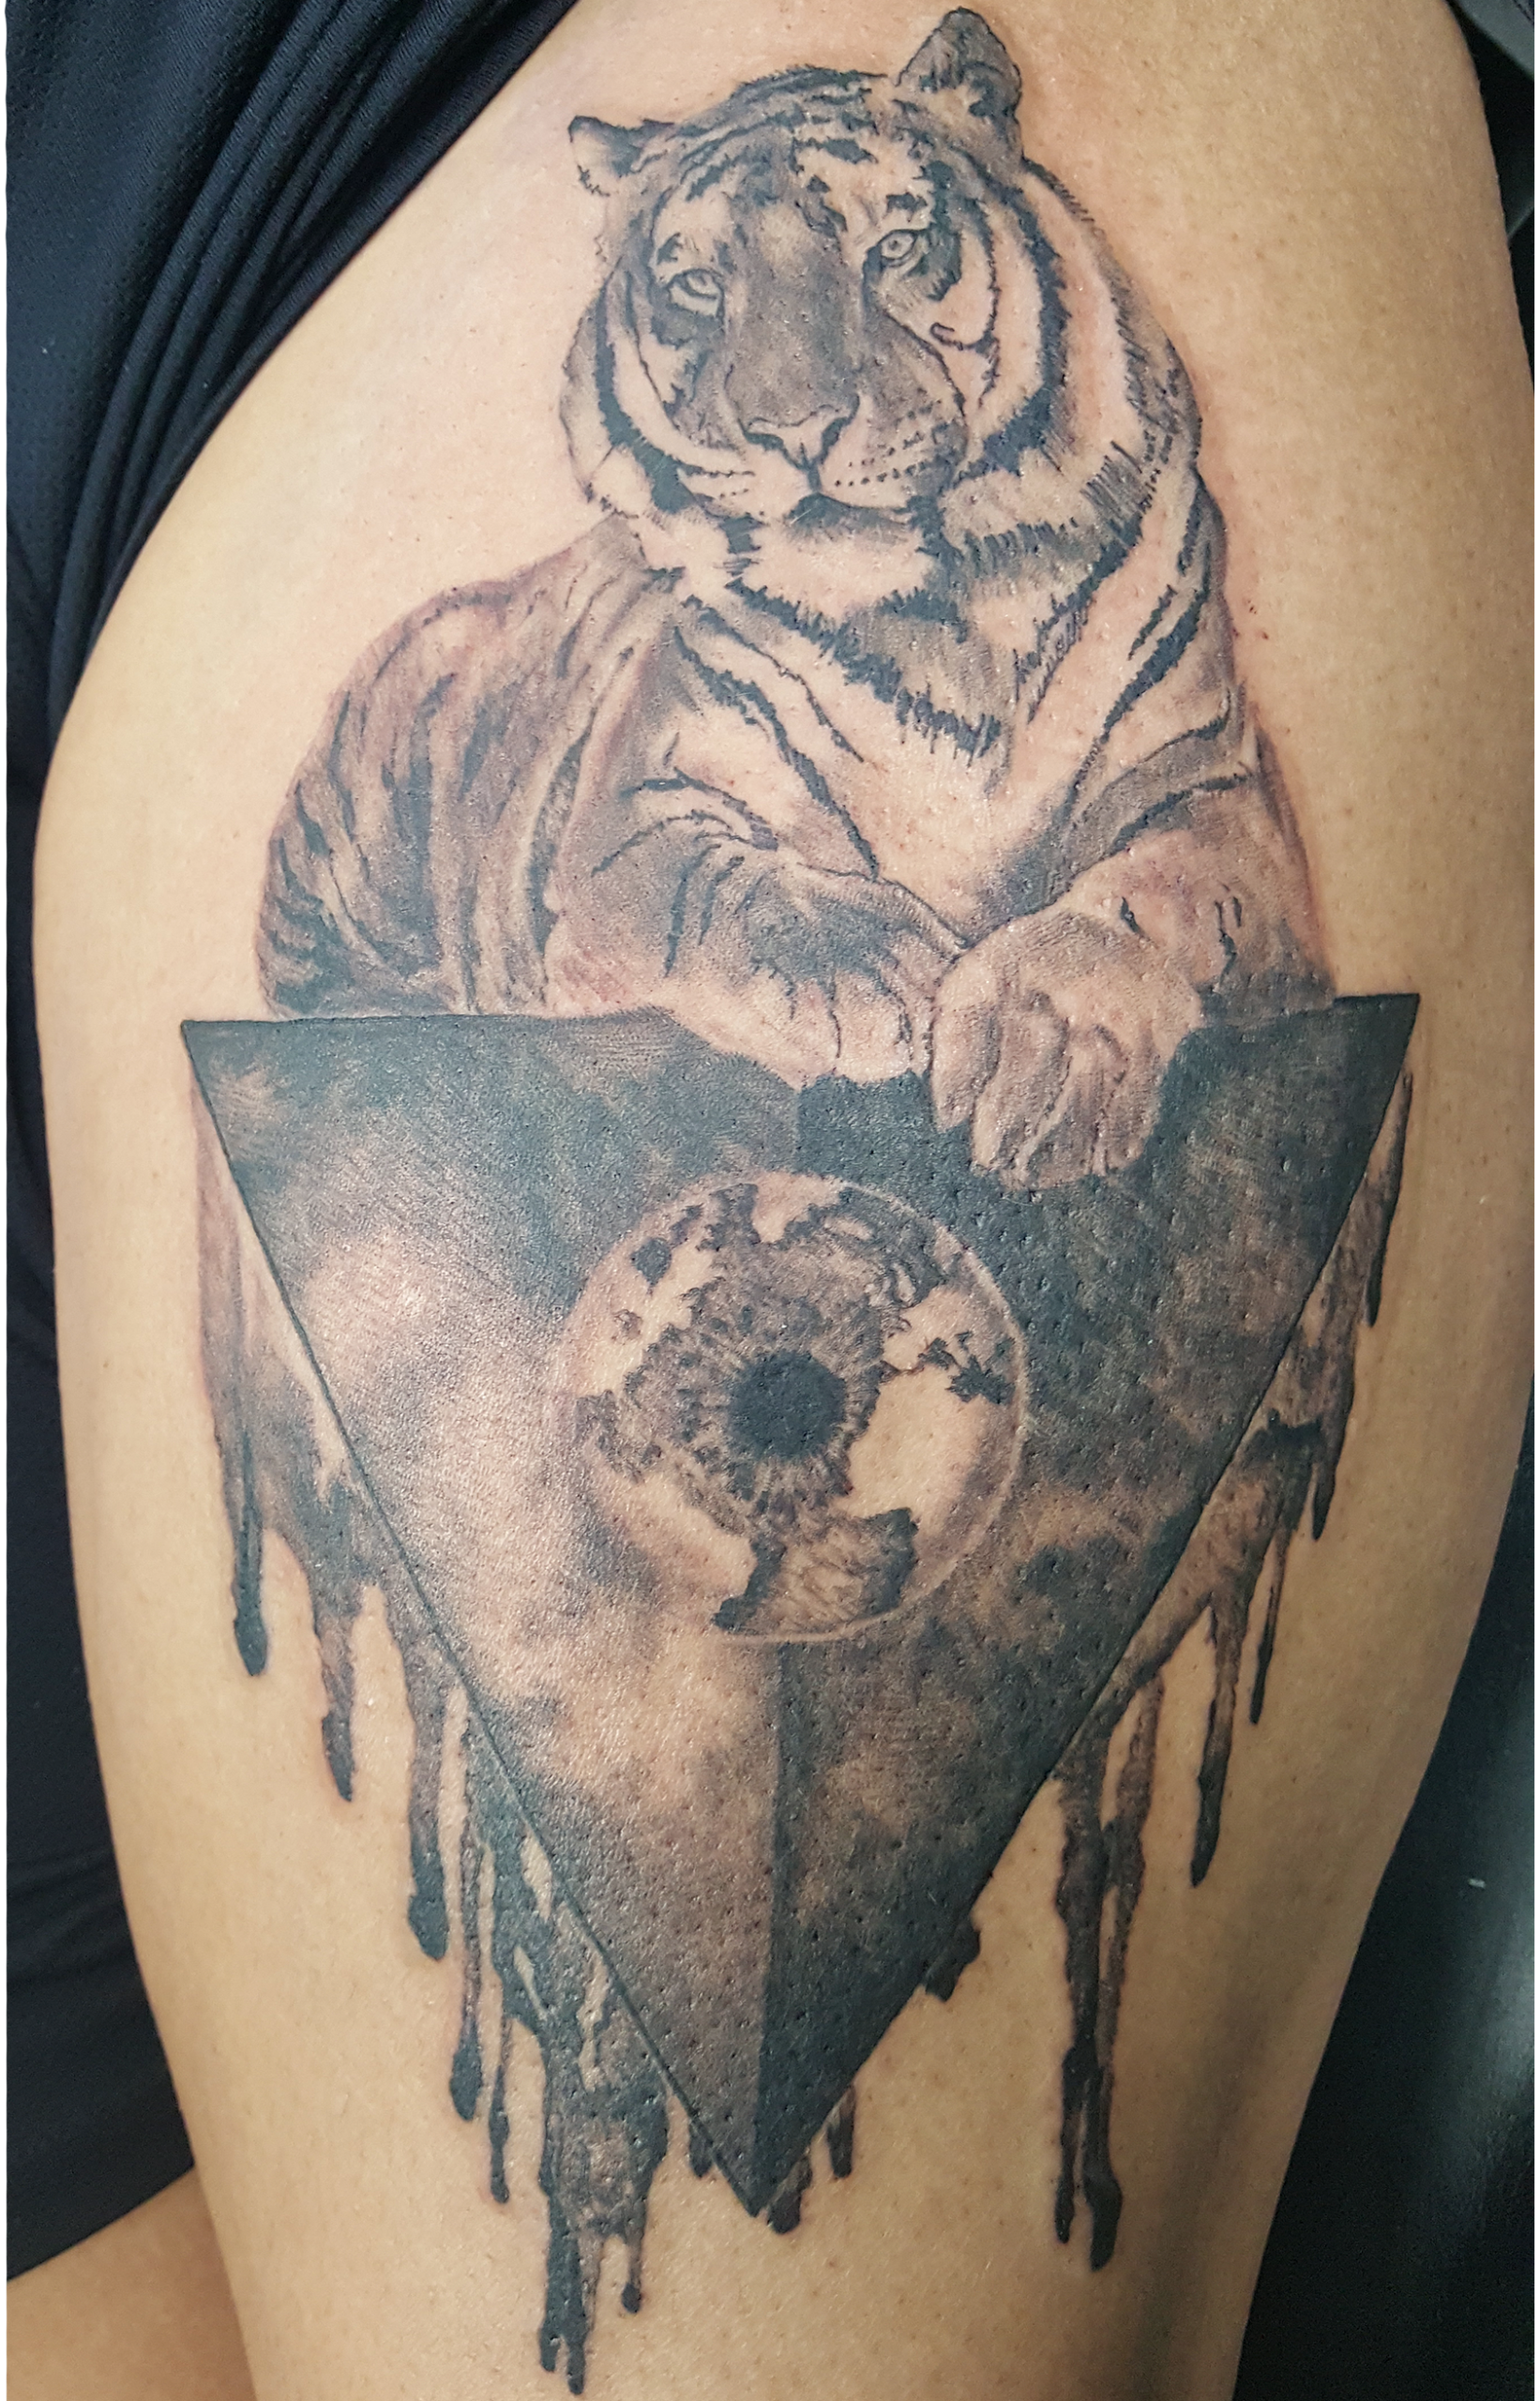 illuminati much?  Tiger resting on his hard won world conquest. Fun black and grey tattoo on a thigh.